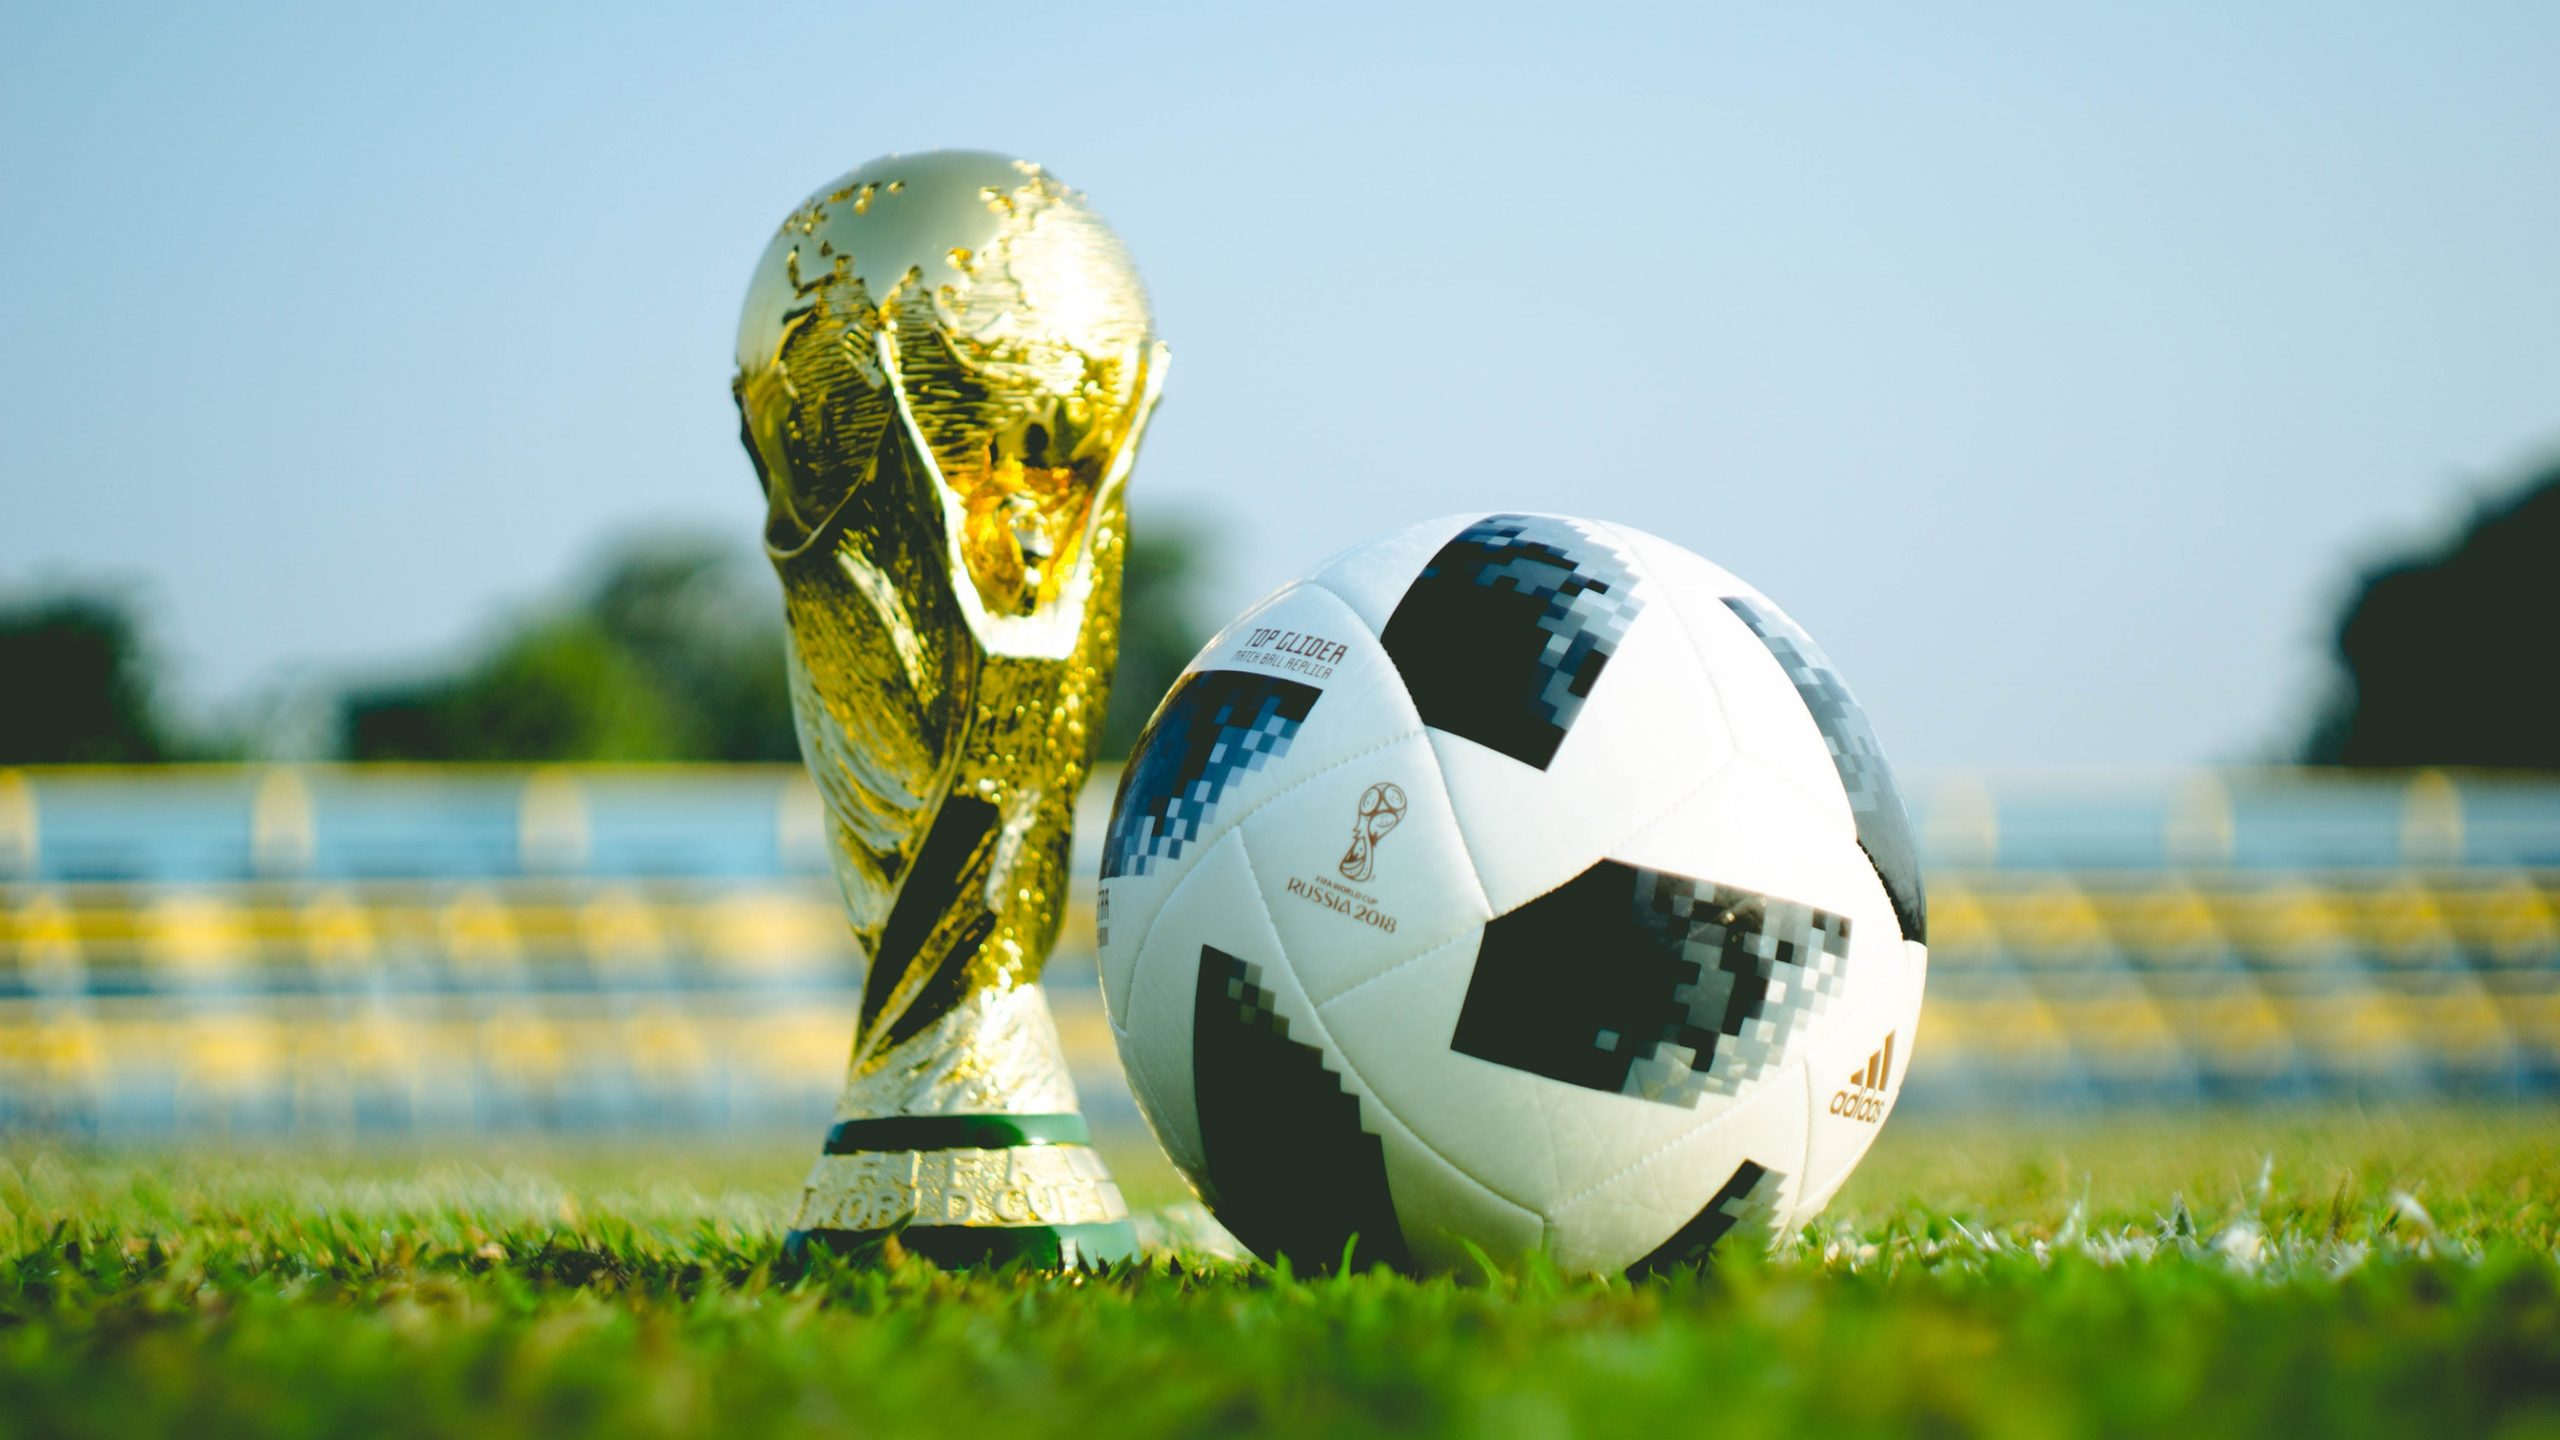 Kecerdasan Buatan Meramalkan Brazil Akan Memenangi Piala Dunia 2018